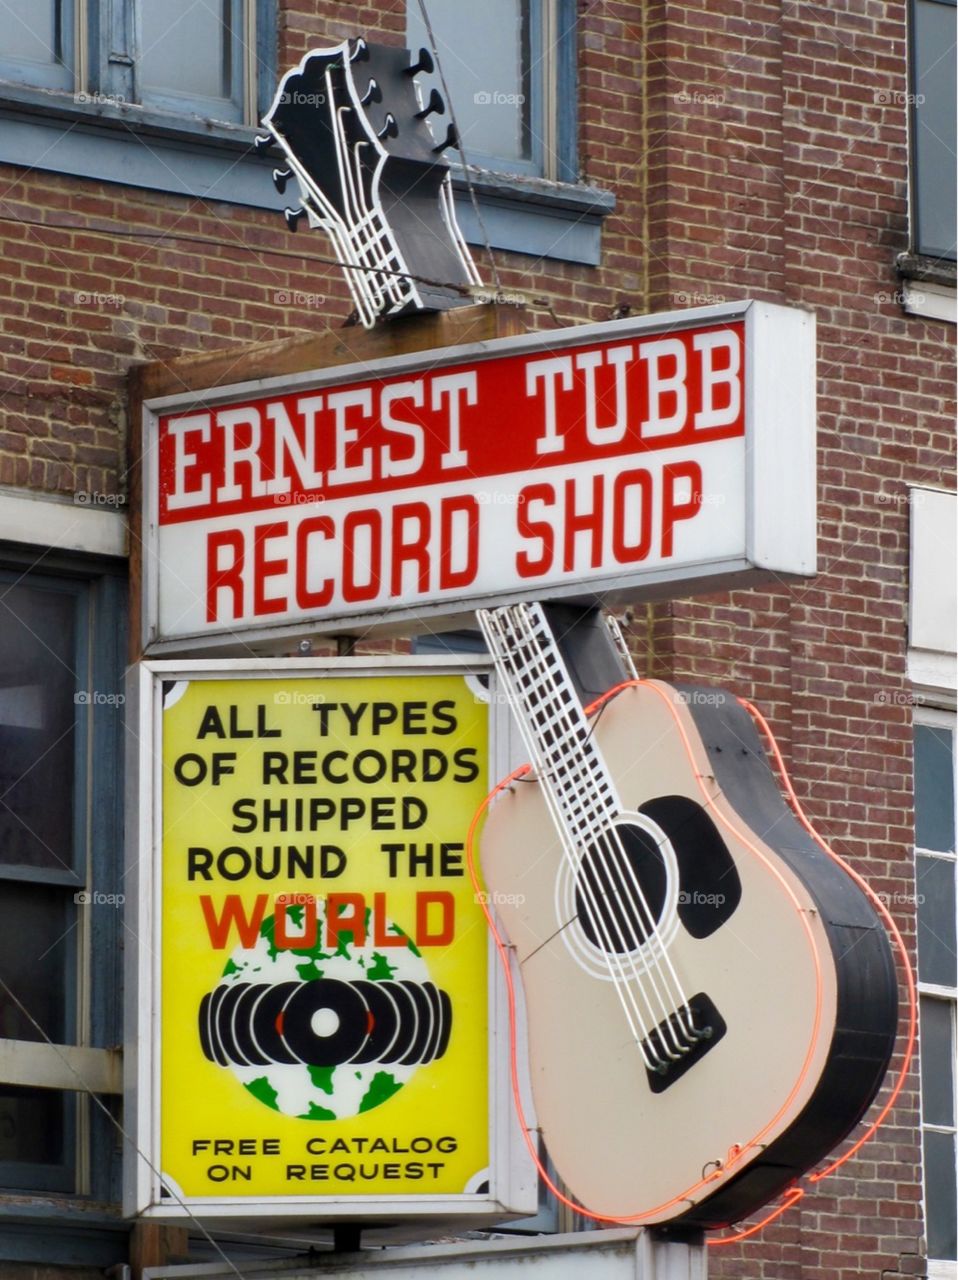 Ernest Tubb Record Shop sign - Nashville, Tennessee